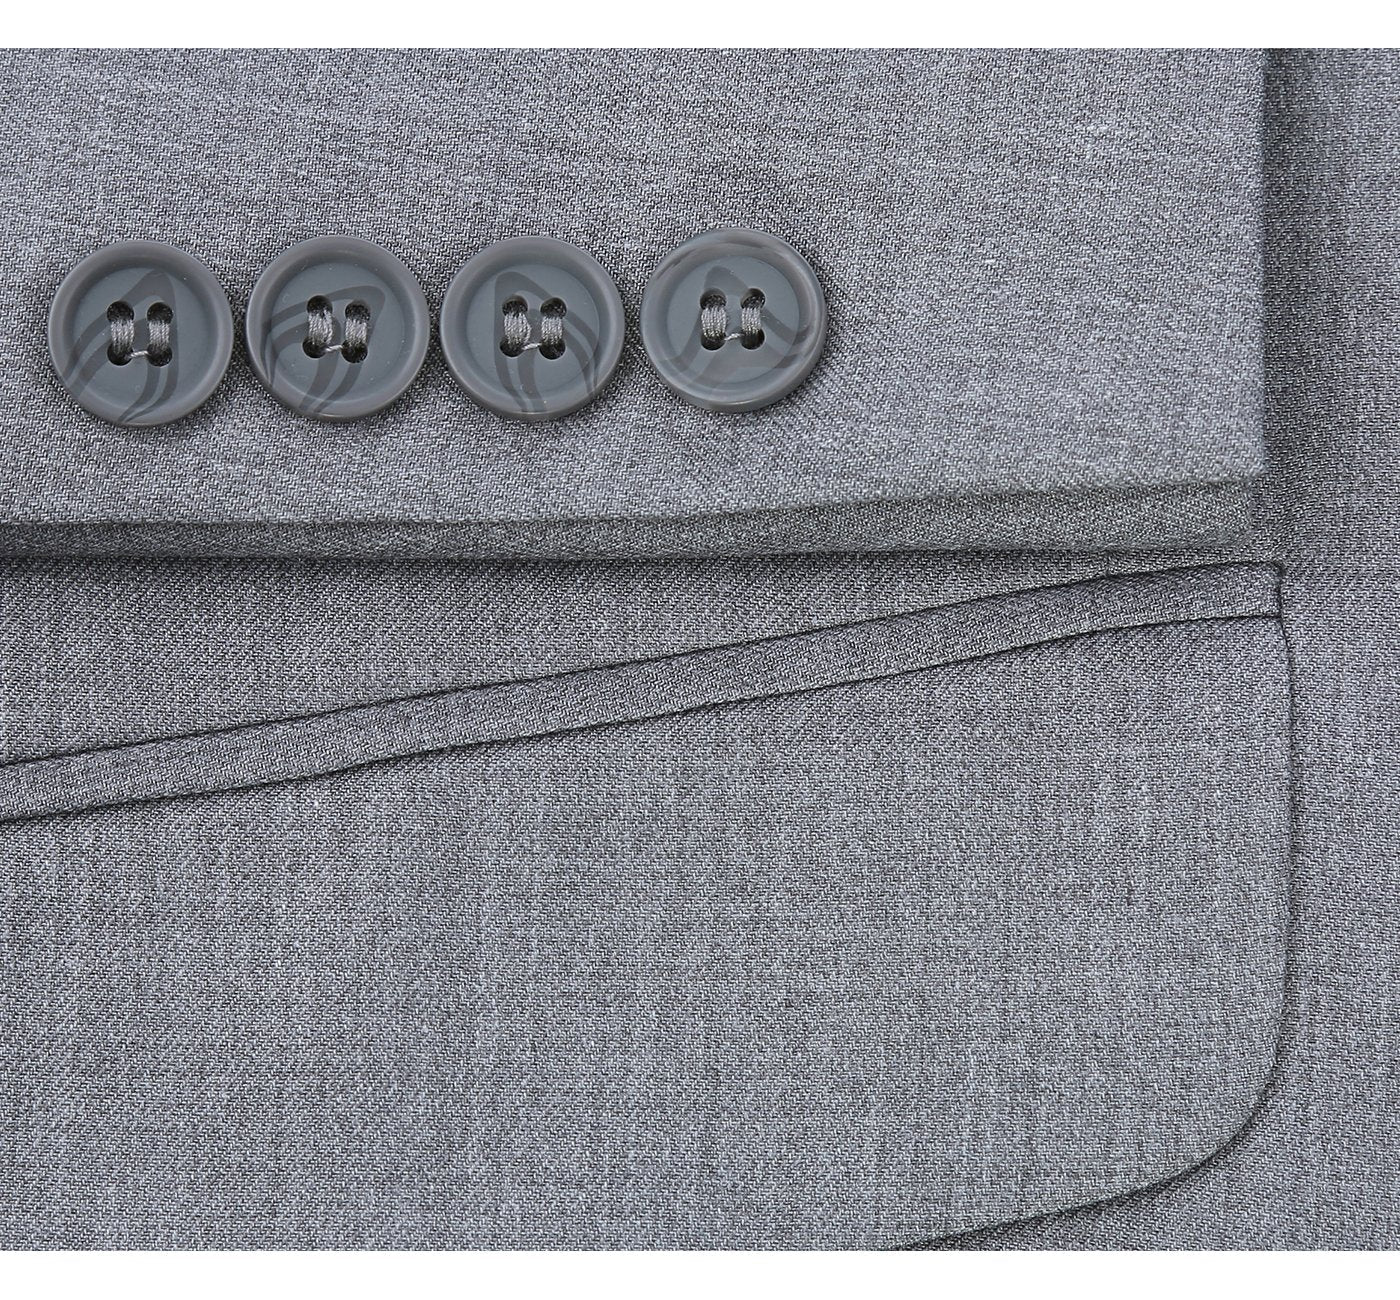 202-2 Men's Light Grey 2-Piece Single Breasted Notch Lapel Suit